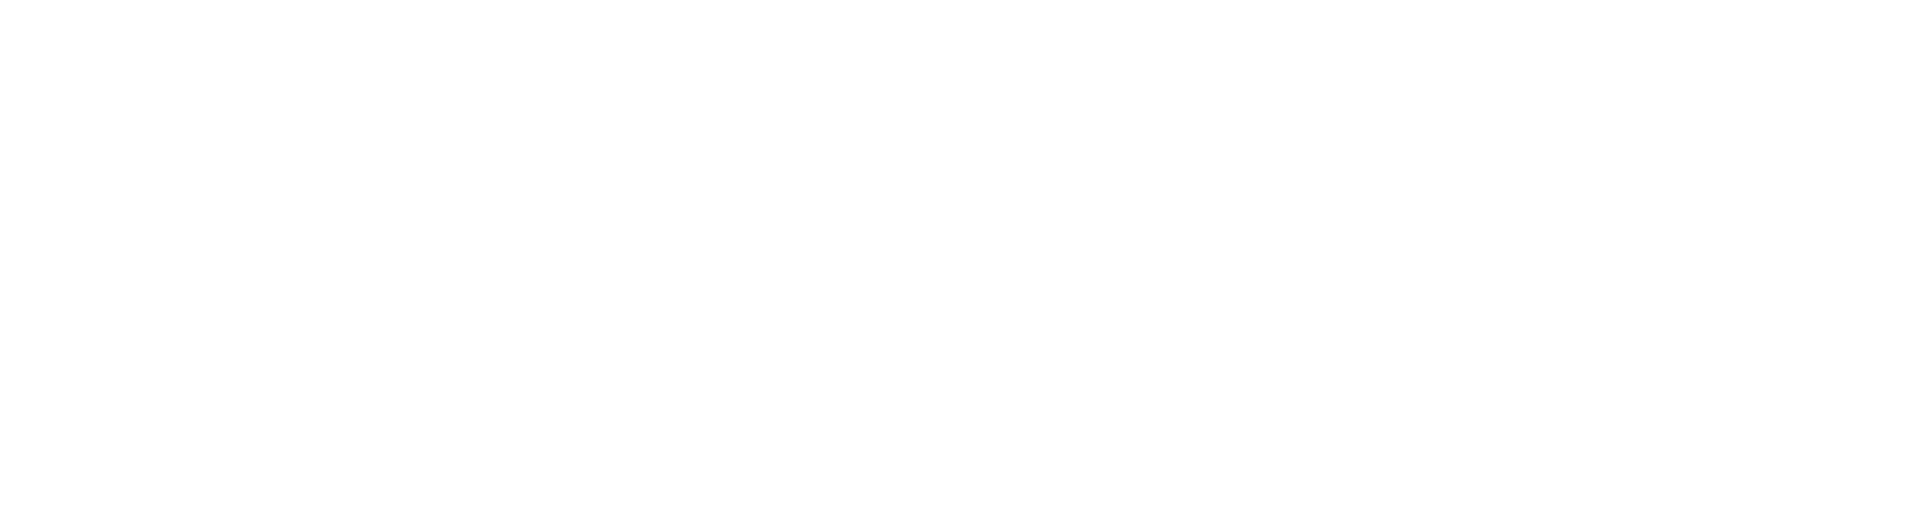 TIF Logo - NDDOT and Downloads